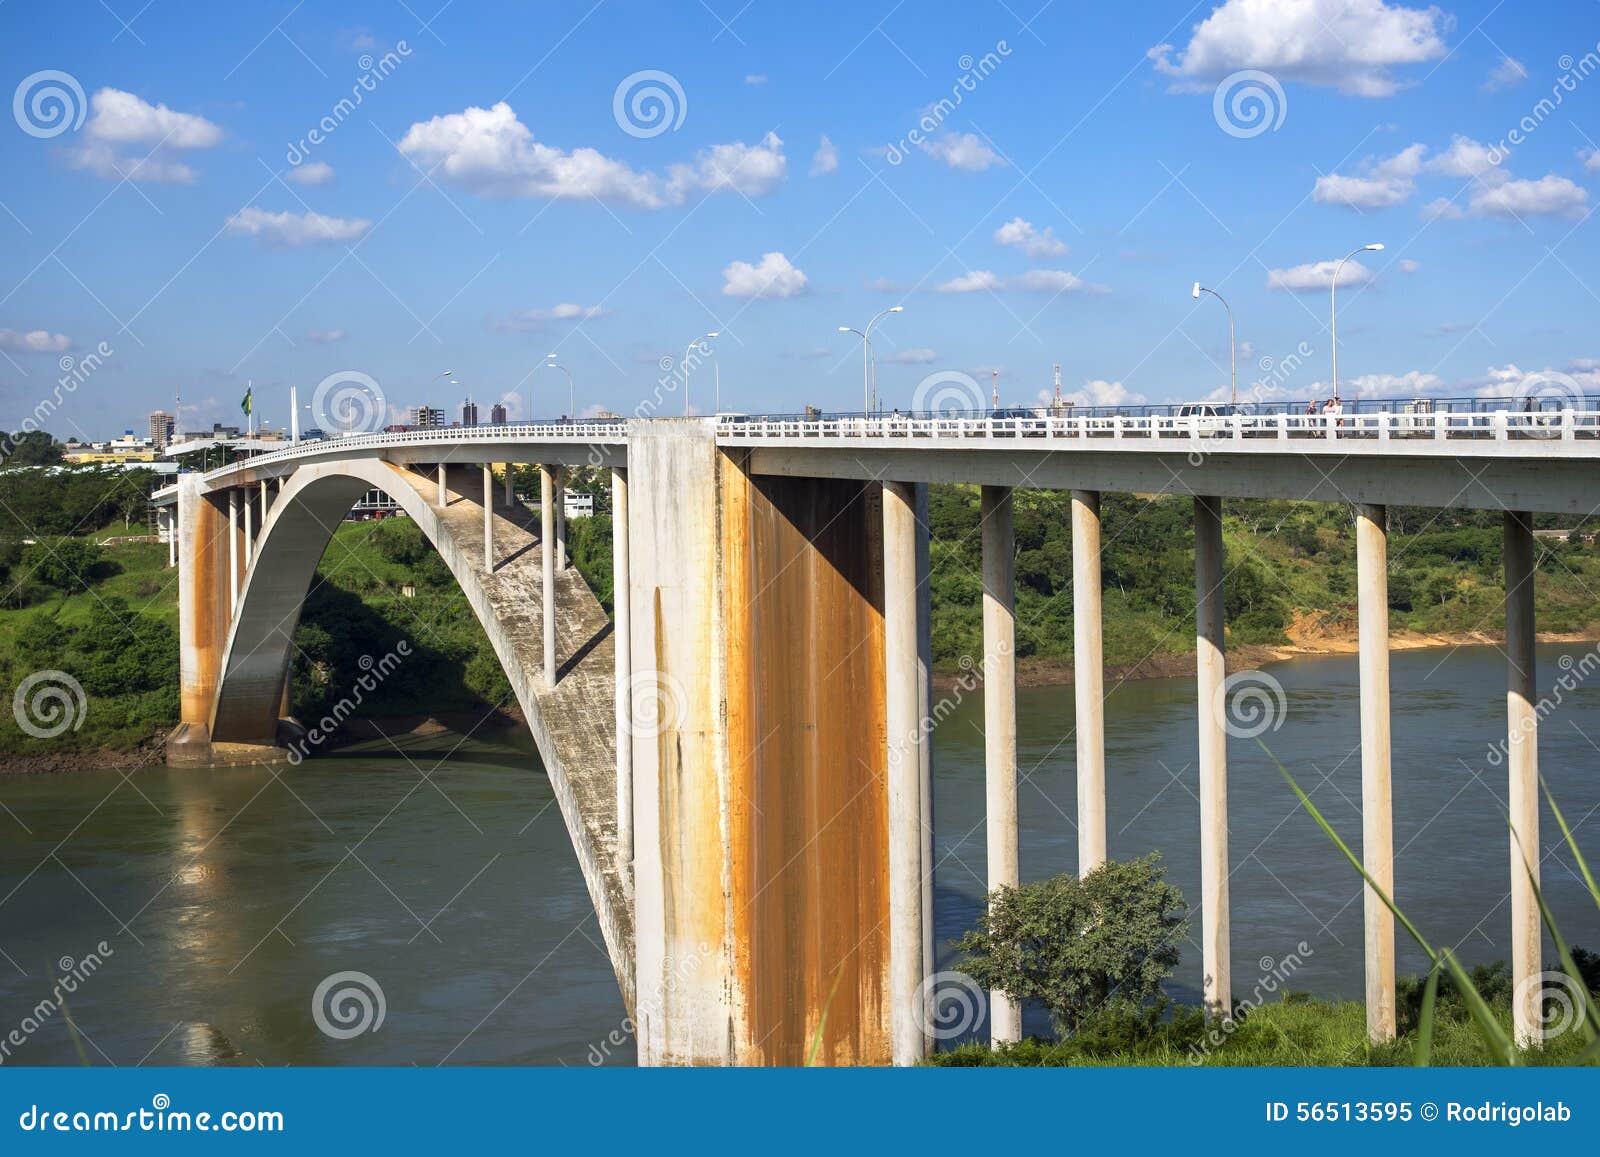 view of friendship bridge (ponte da amizade), connecting foz do